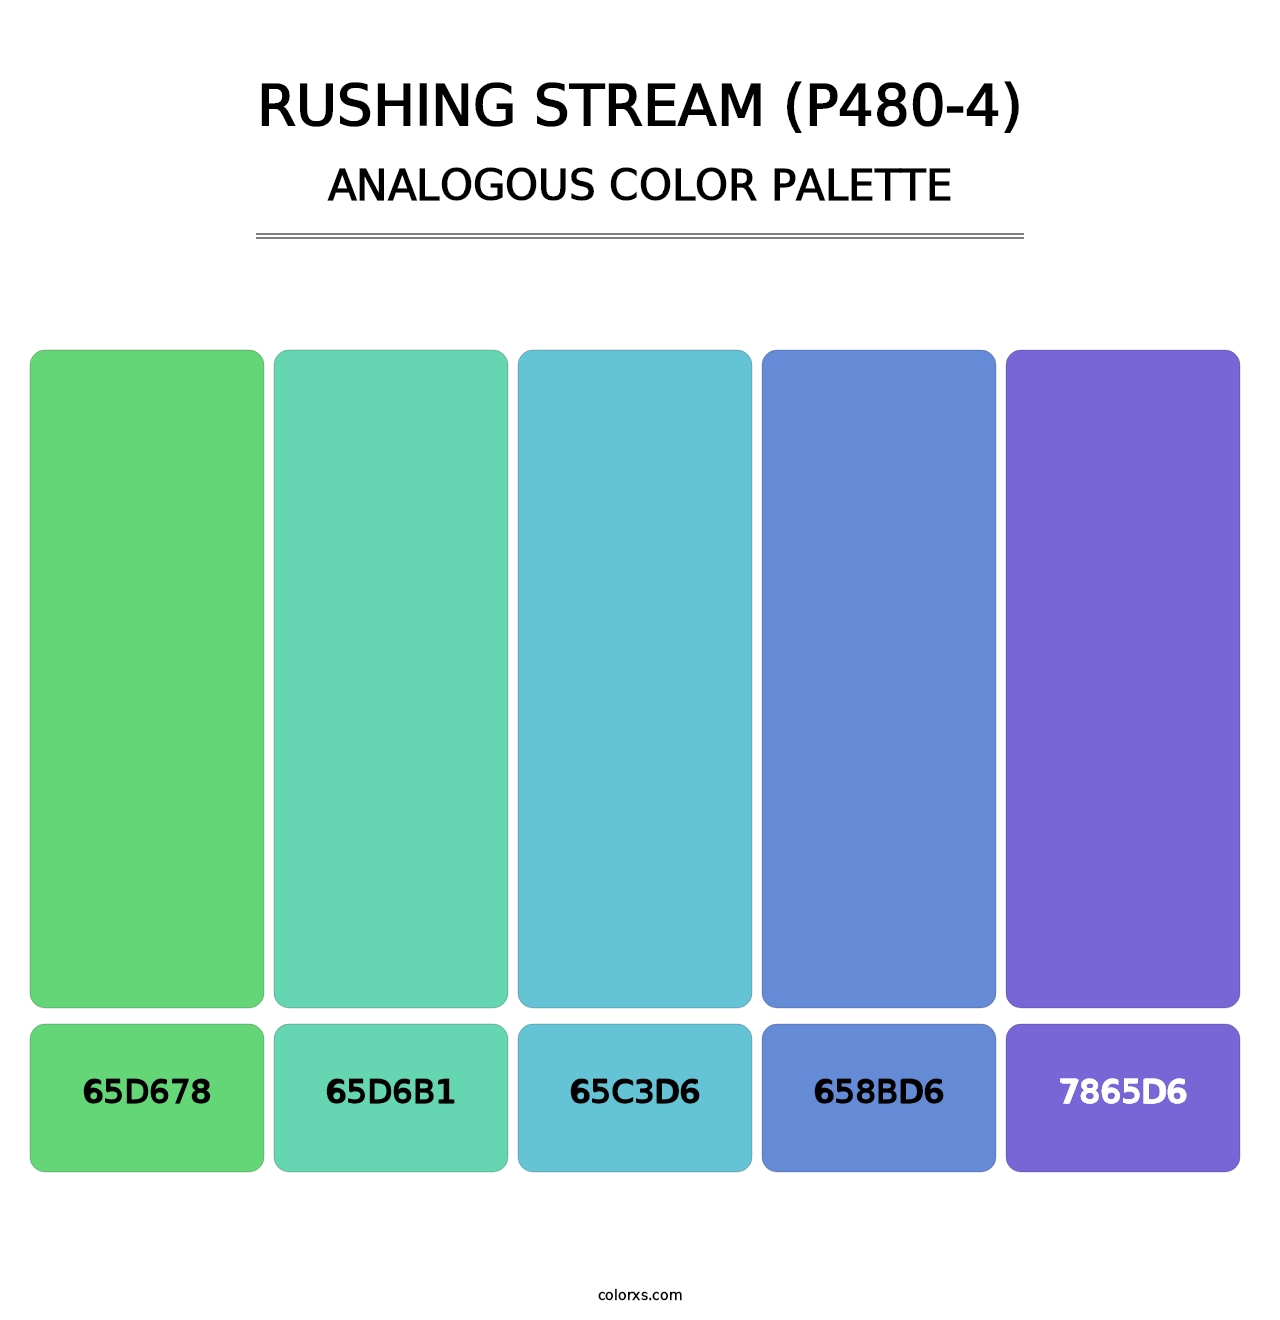 Rushing Stream (P480-4) - Analogous Color Palette